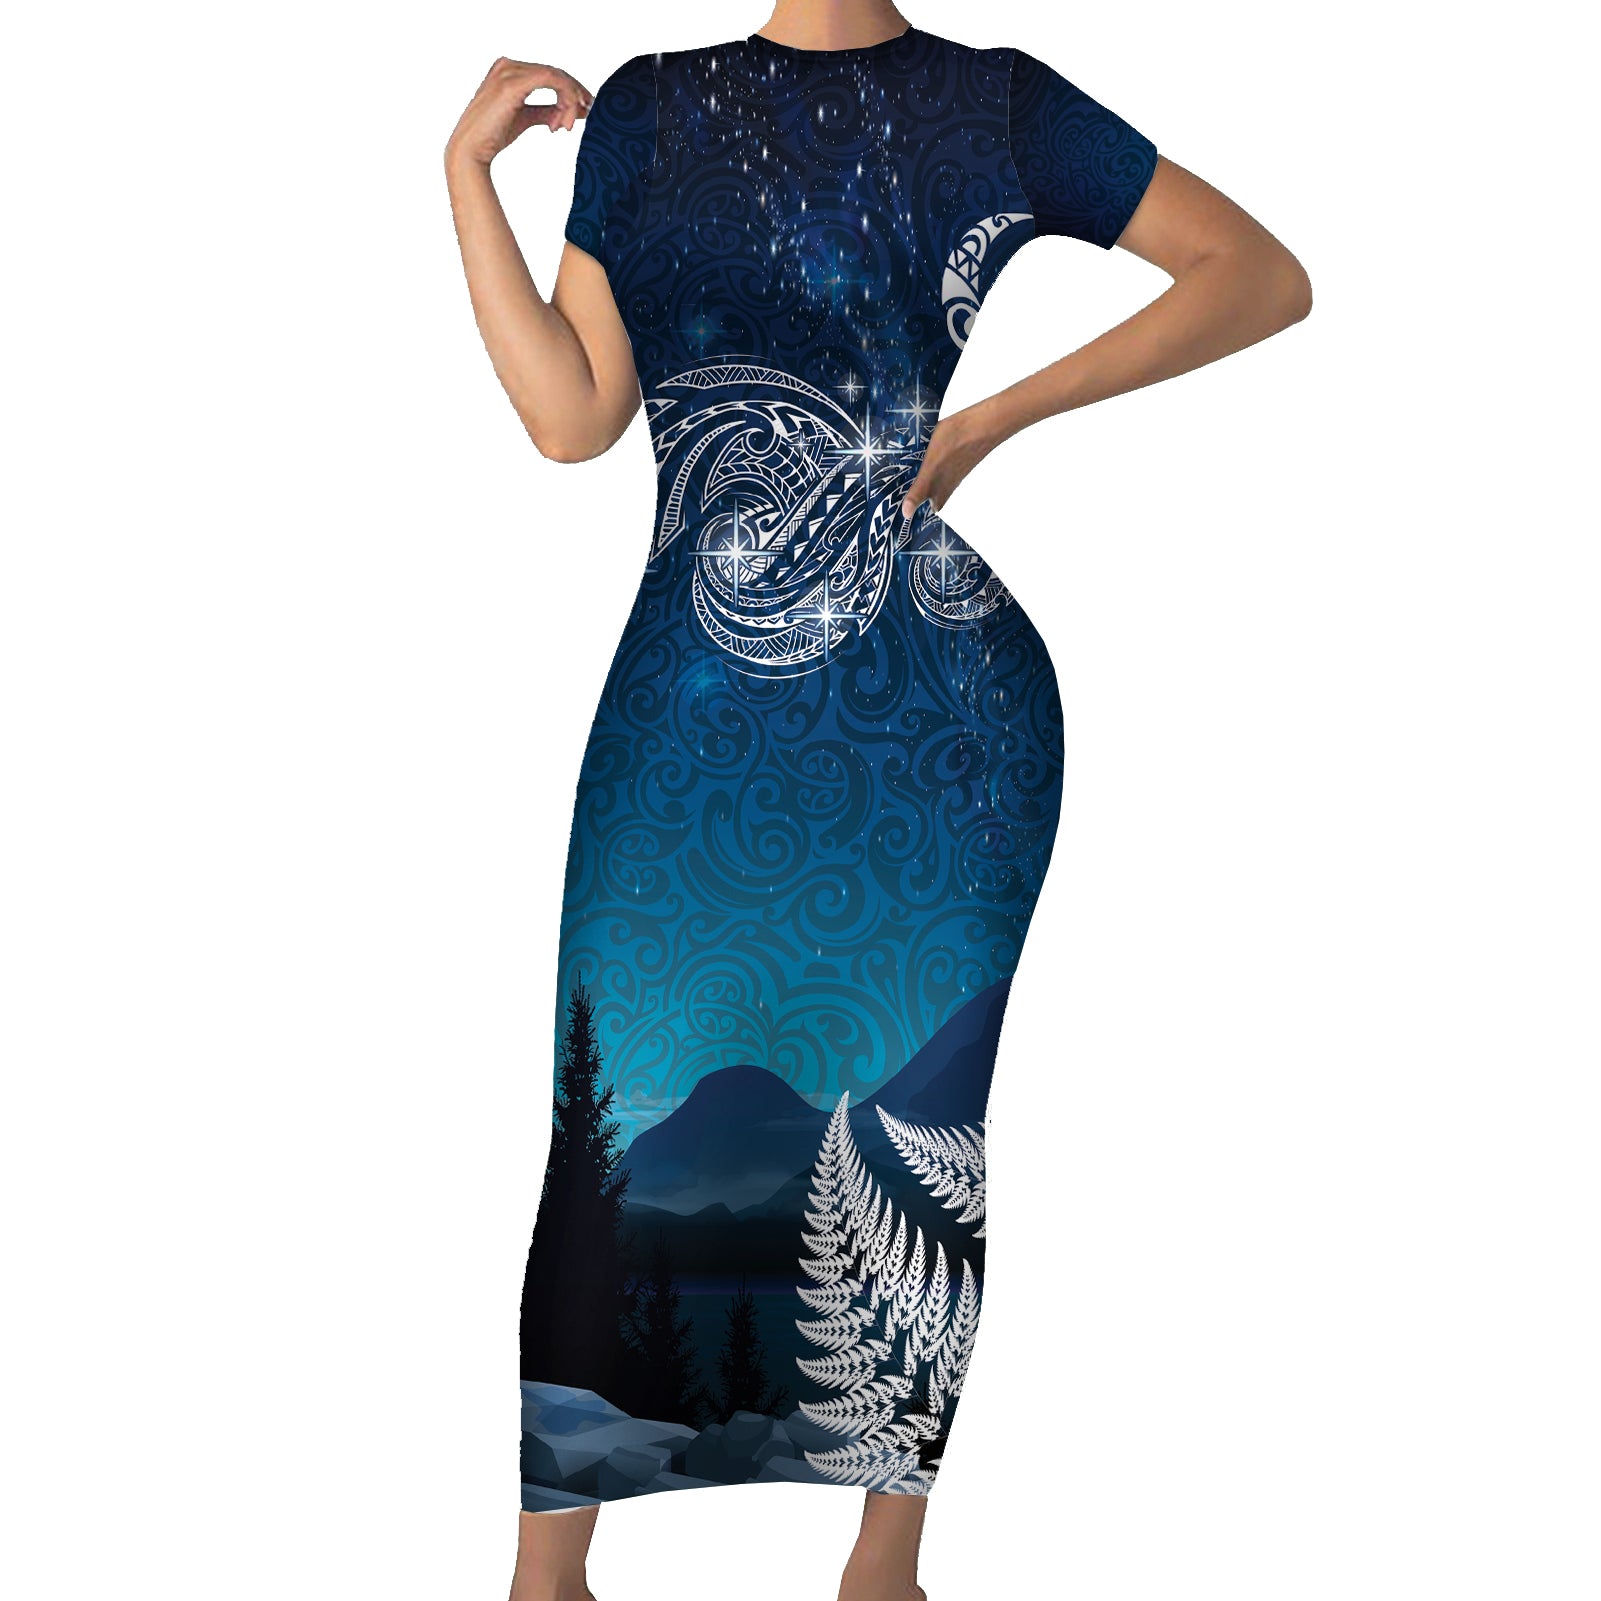 New Zealand Matariki Short Sleeve Bodycon Dress Starry Night Style